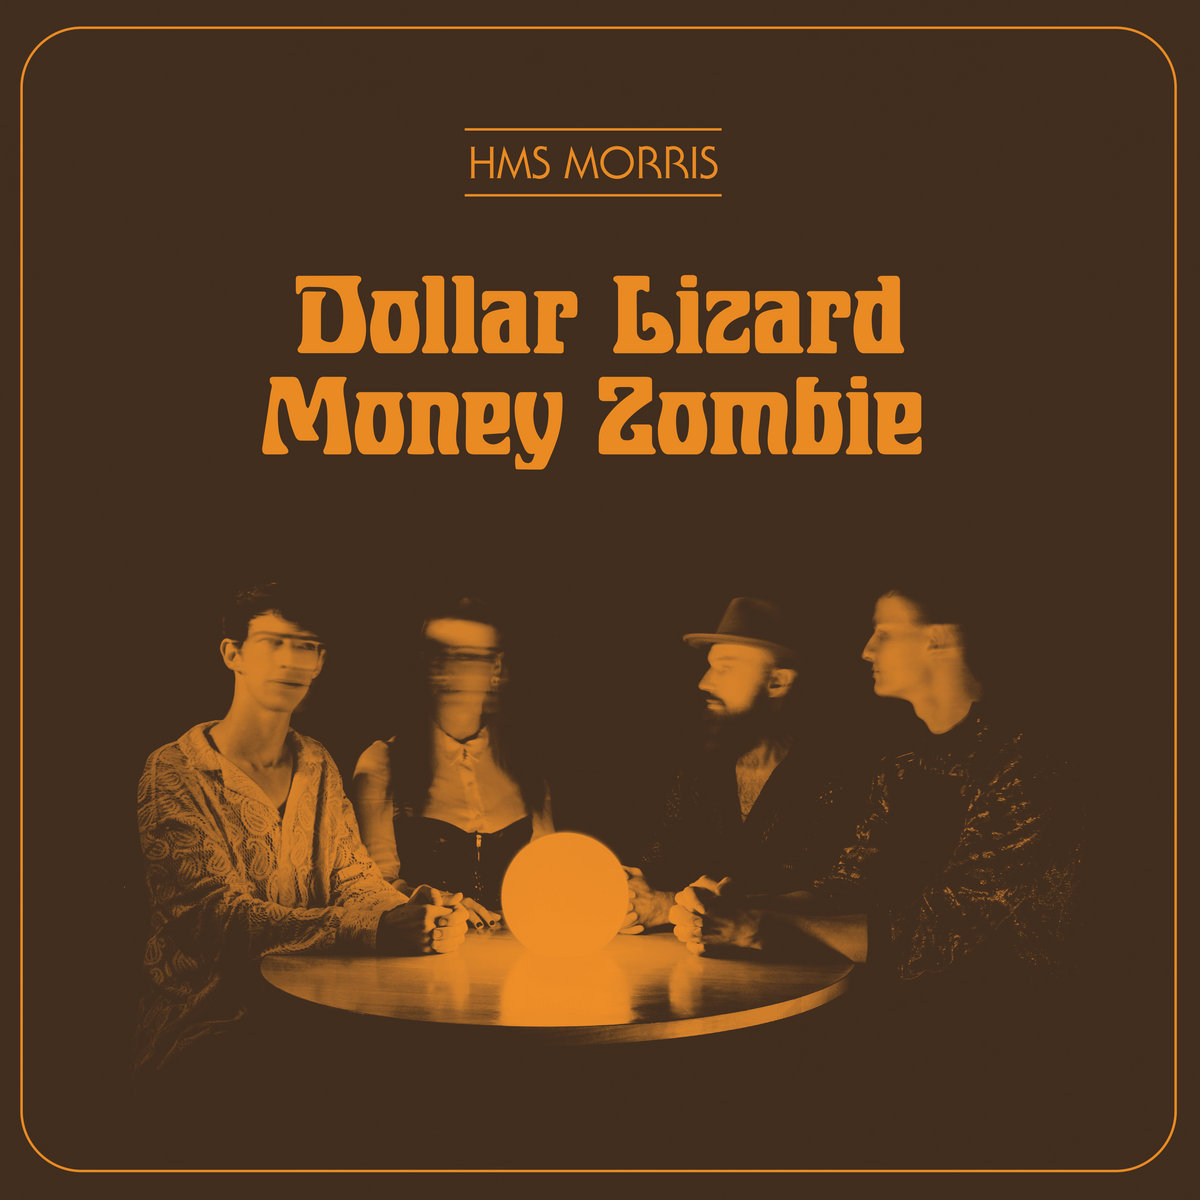 ALBUM REVIEW: Dollar Lizard Money Zombie by HMS Morris